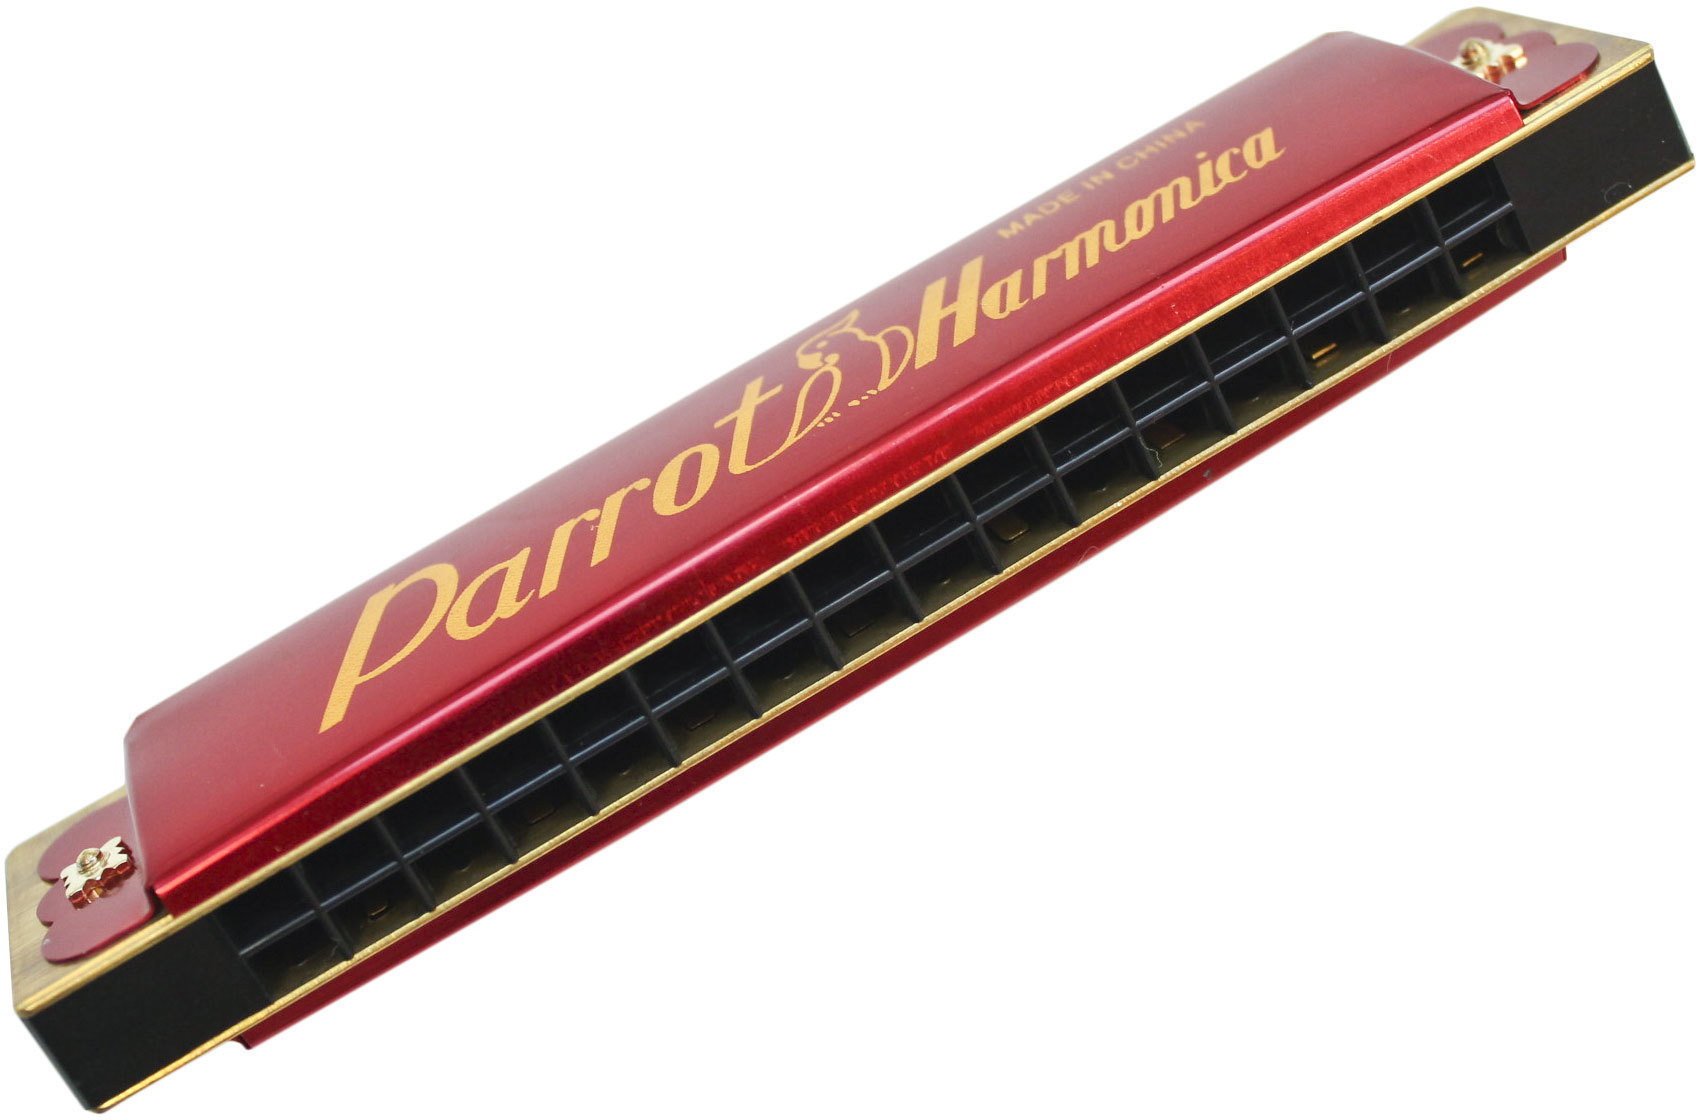 Diatonic harmonica Parrot HD 16 1 E